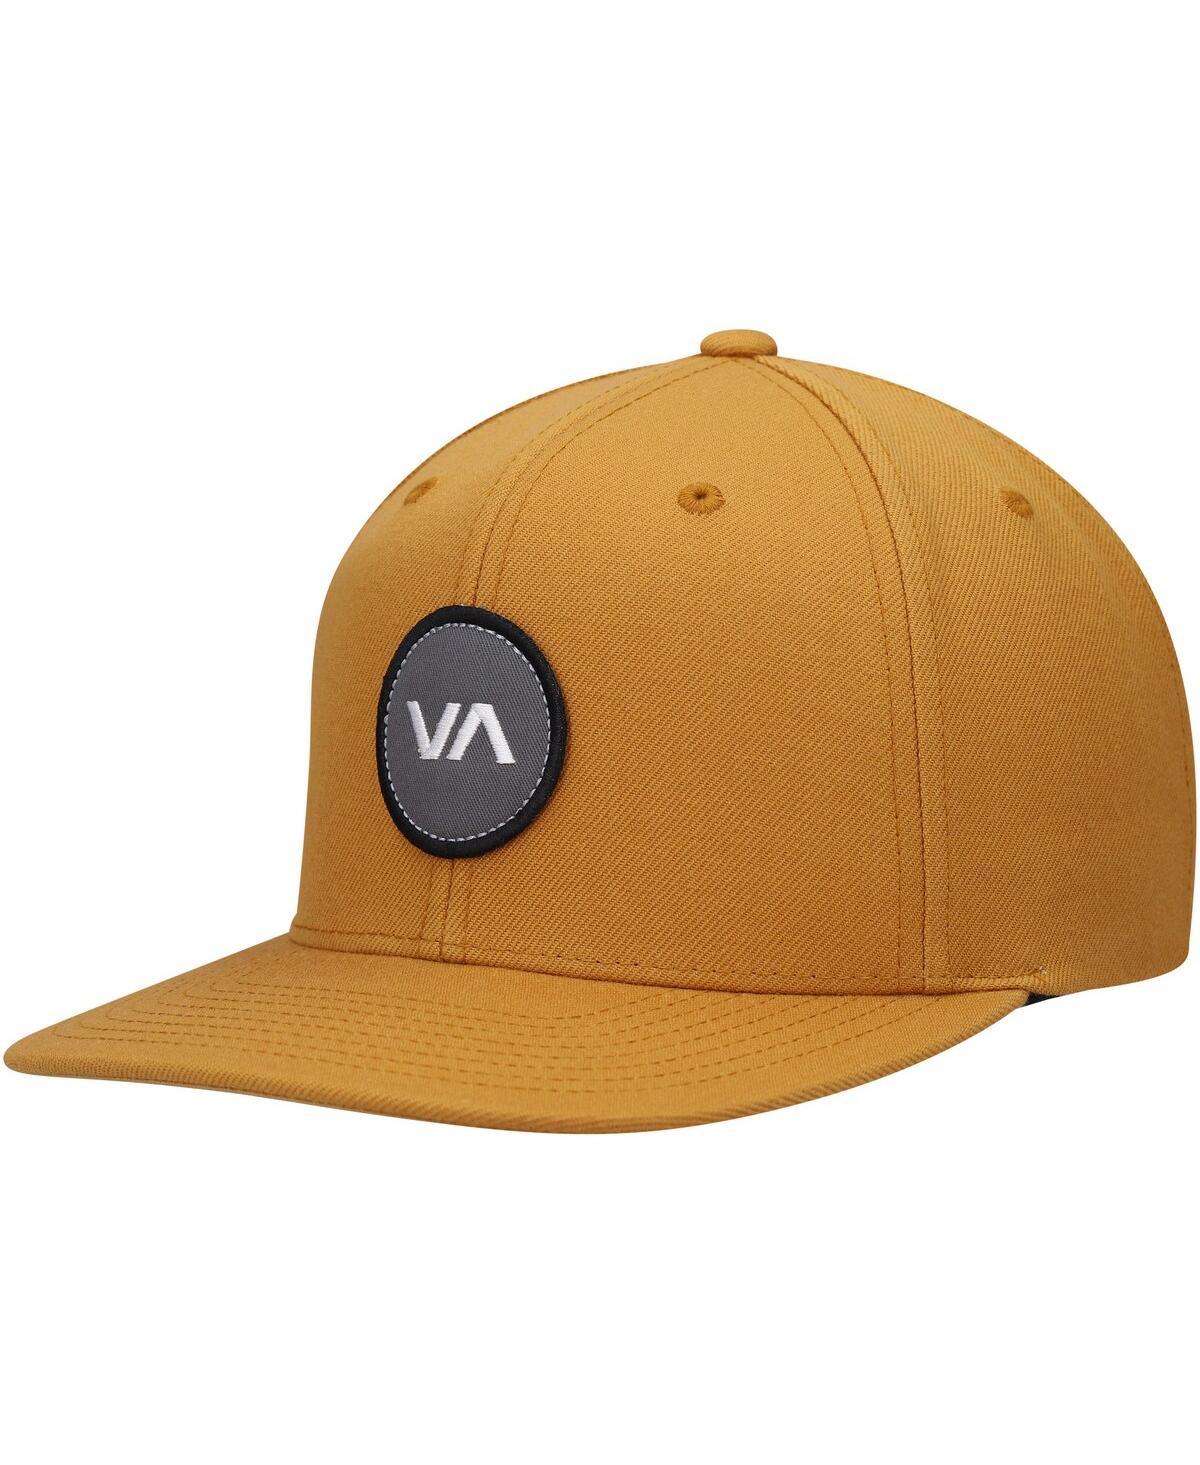 Men's Gold Va Patch Snapback Hat - Gdr-golden